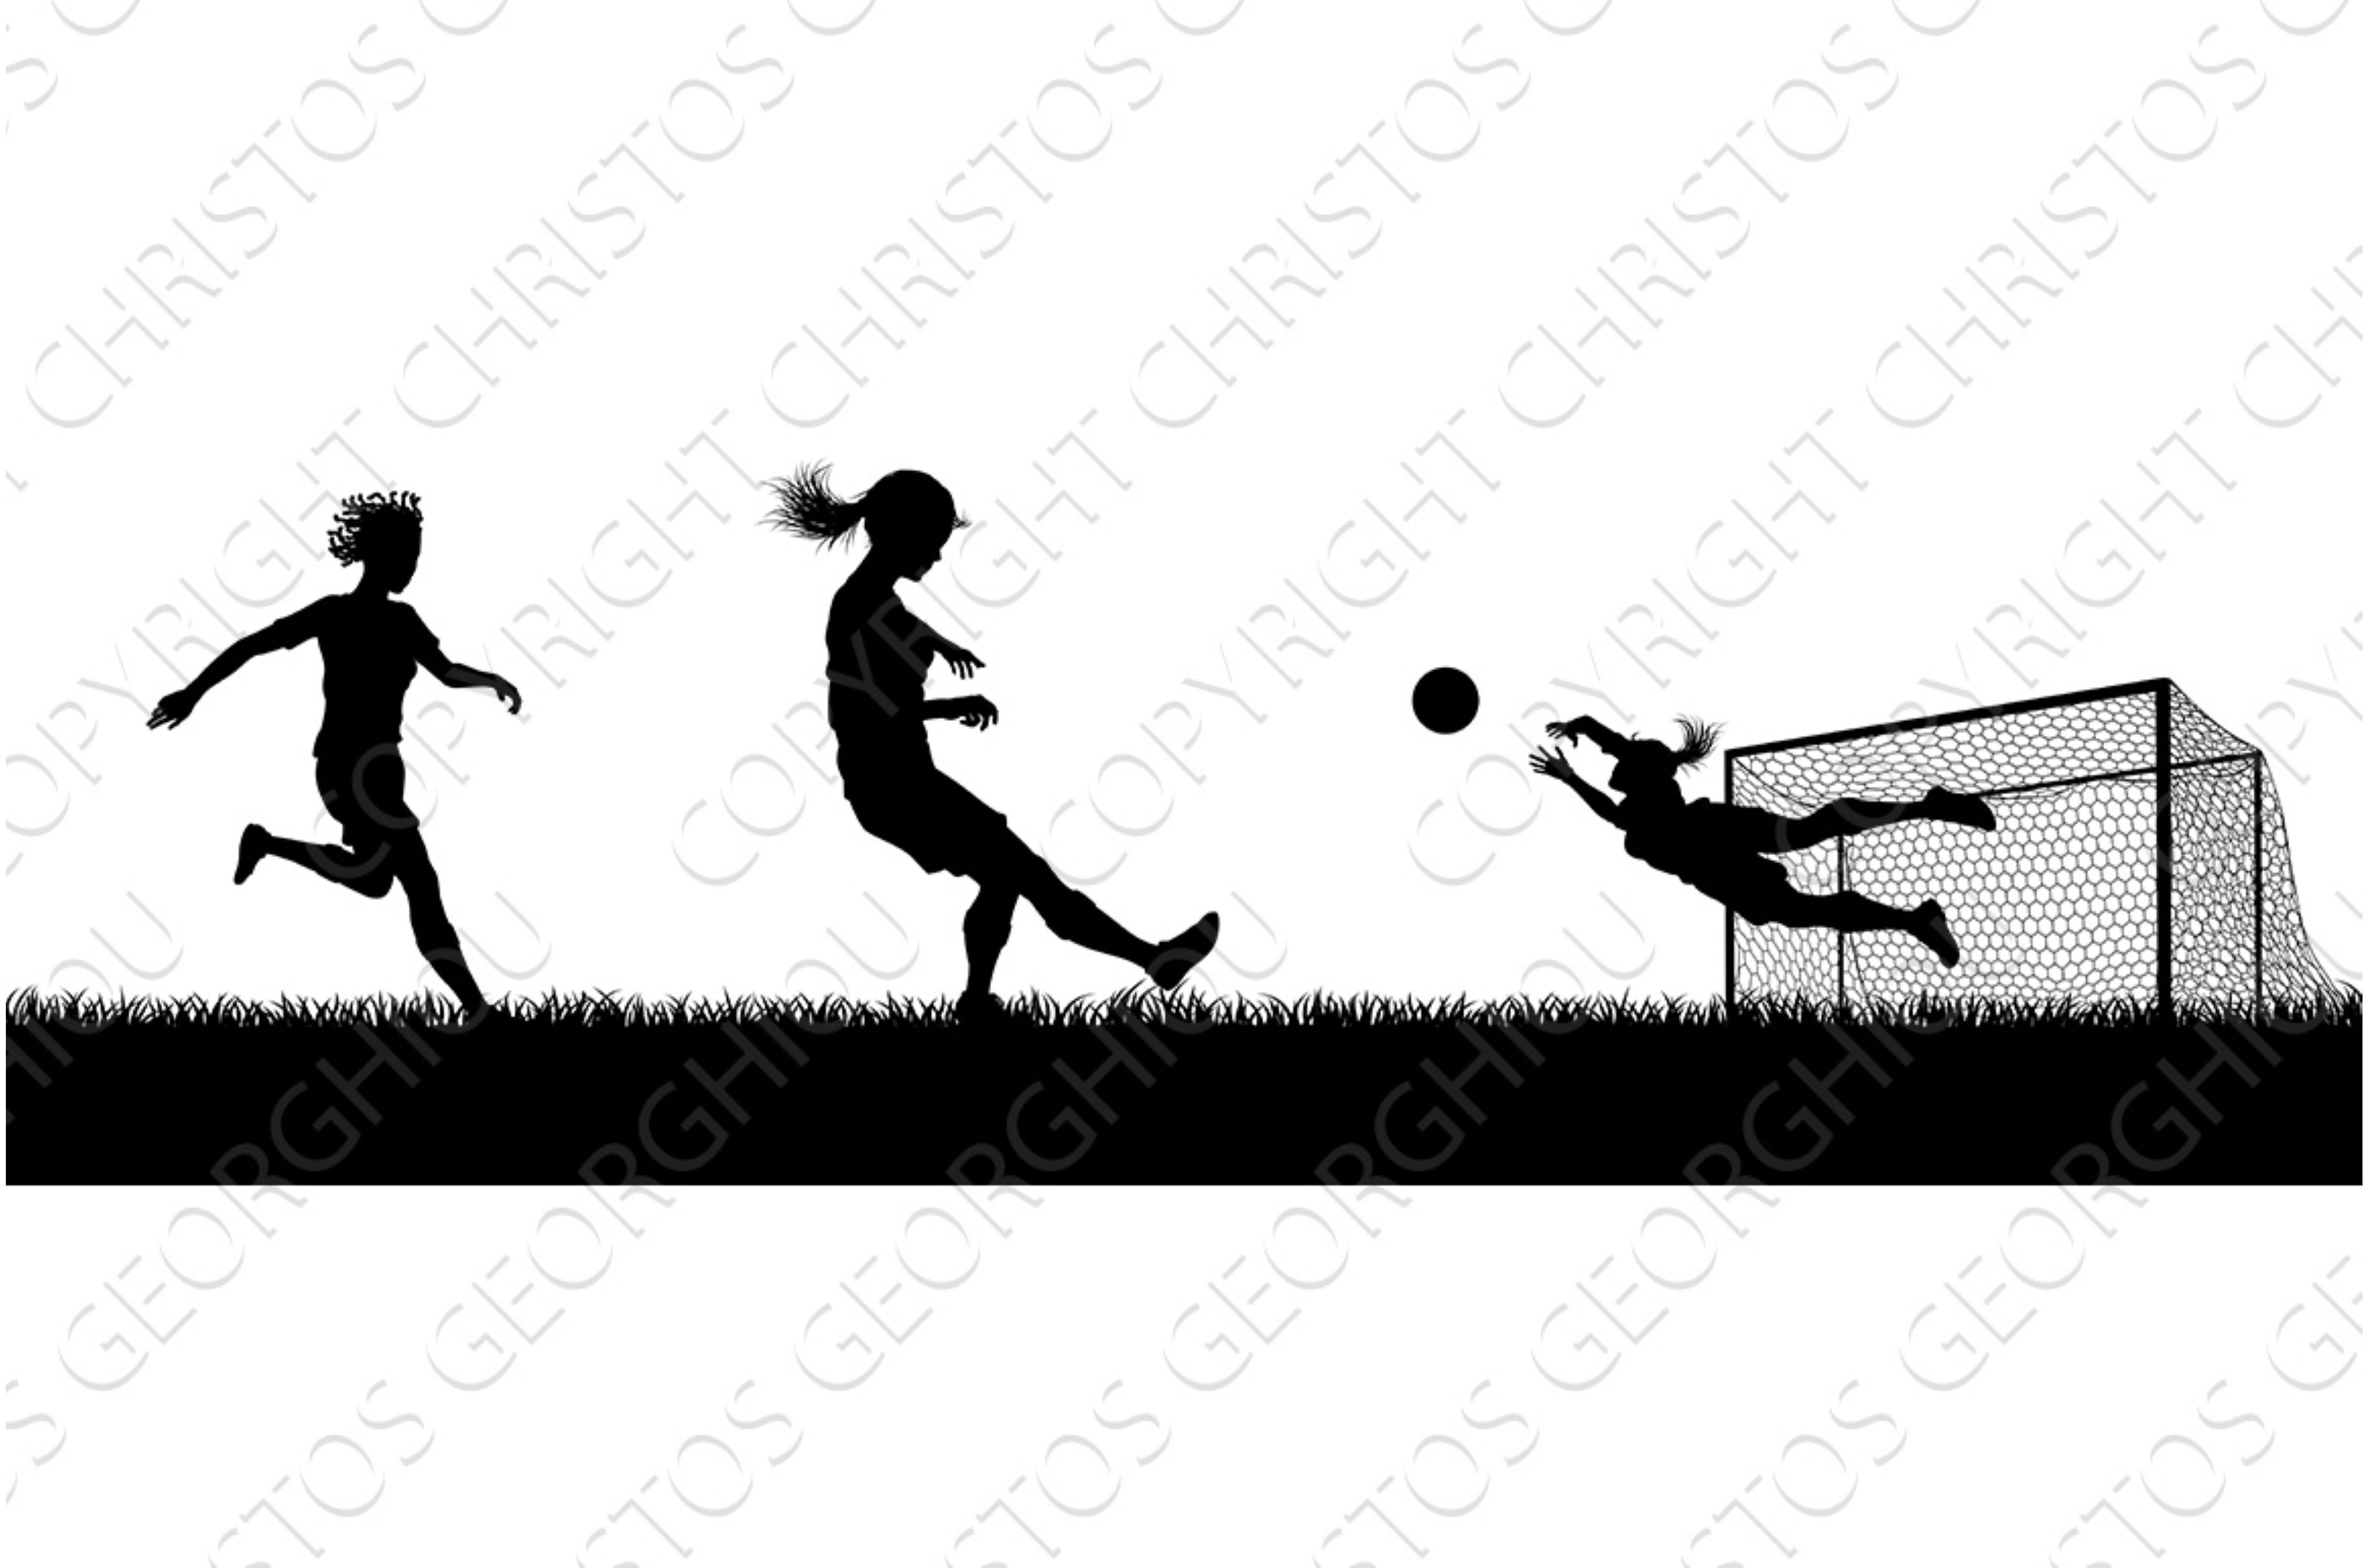 Women Soccer Football Players Scene cover image.